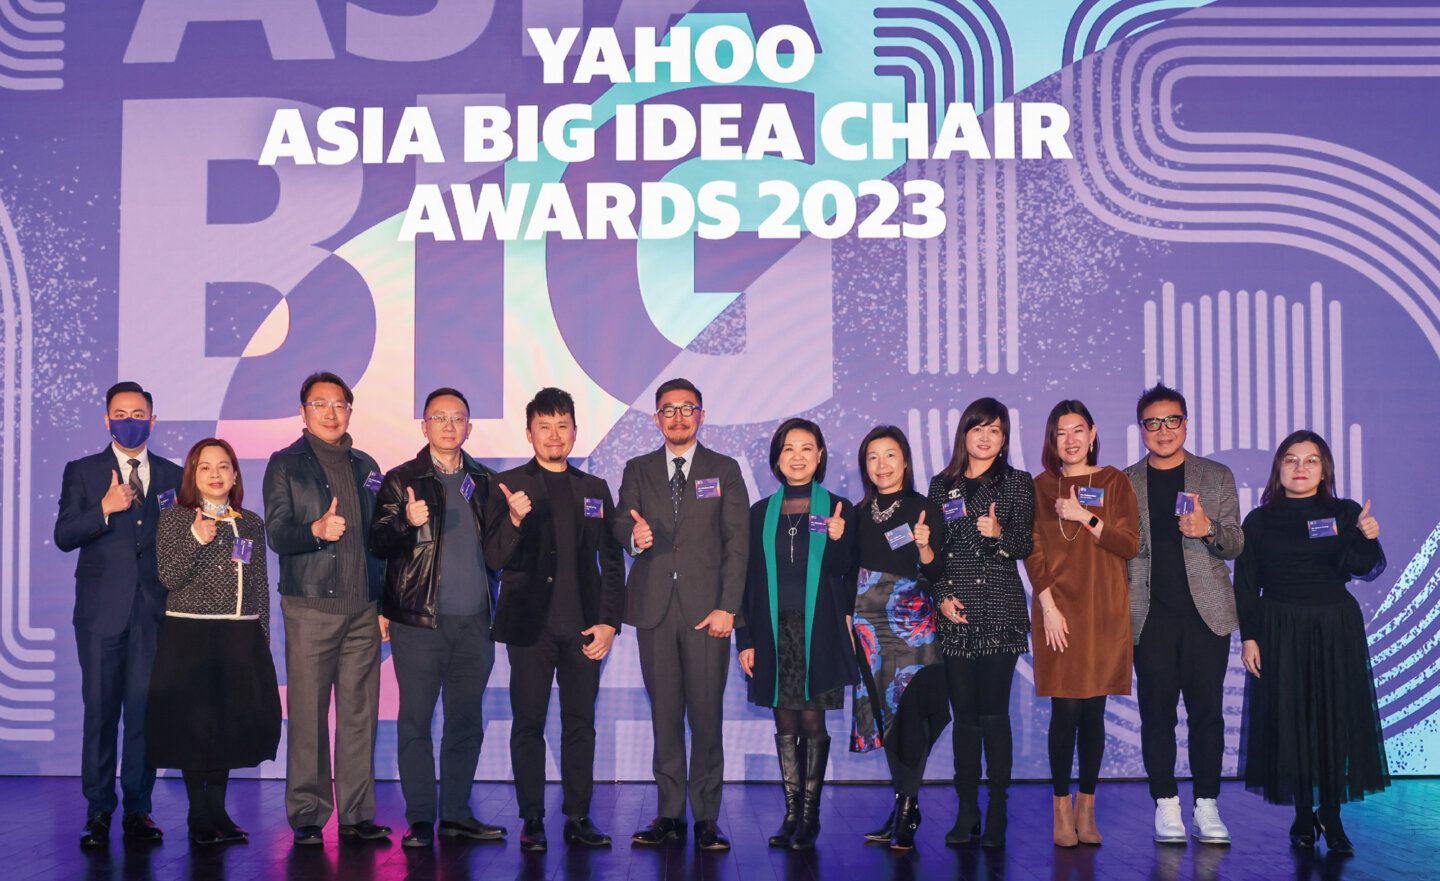 Yahoo Asia Big Idea Chair 亞洲網路創意廣告大獎得獎名單出爐